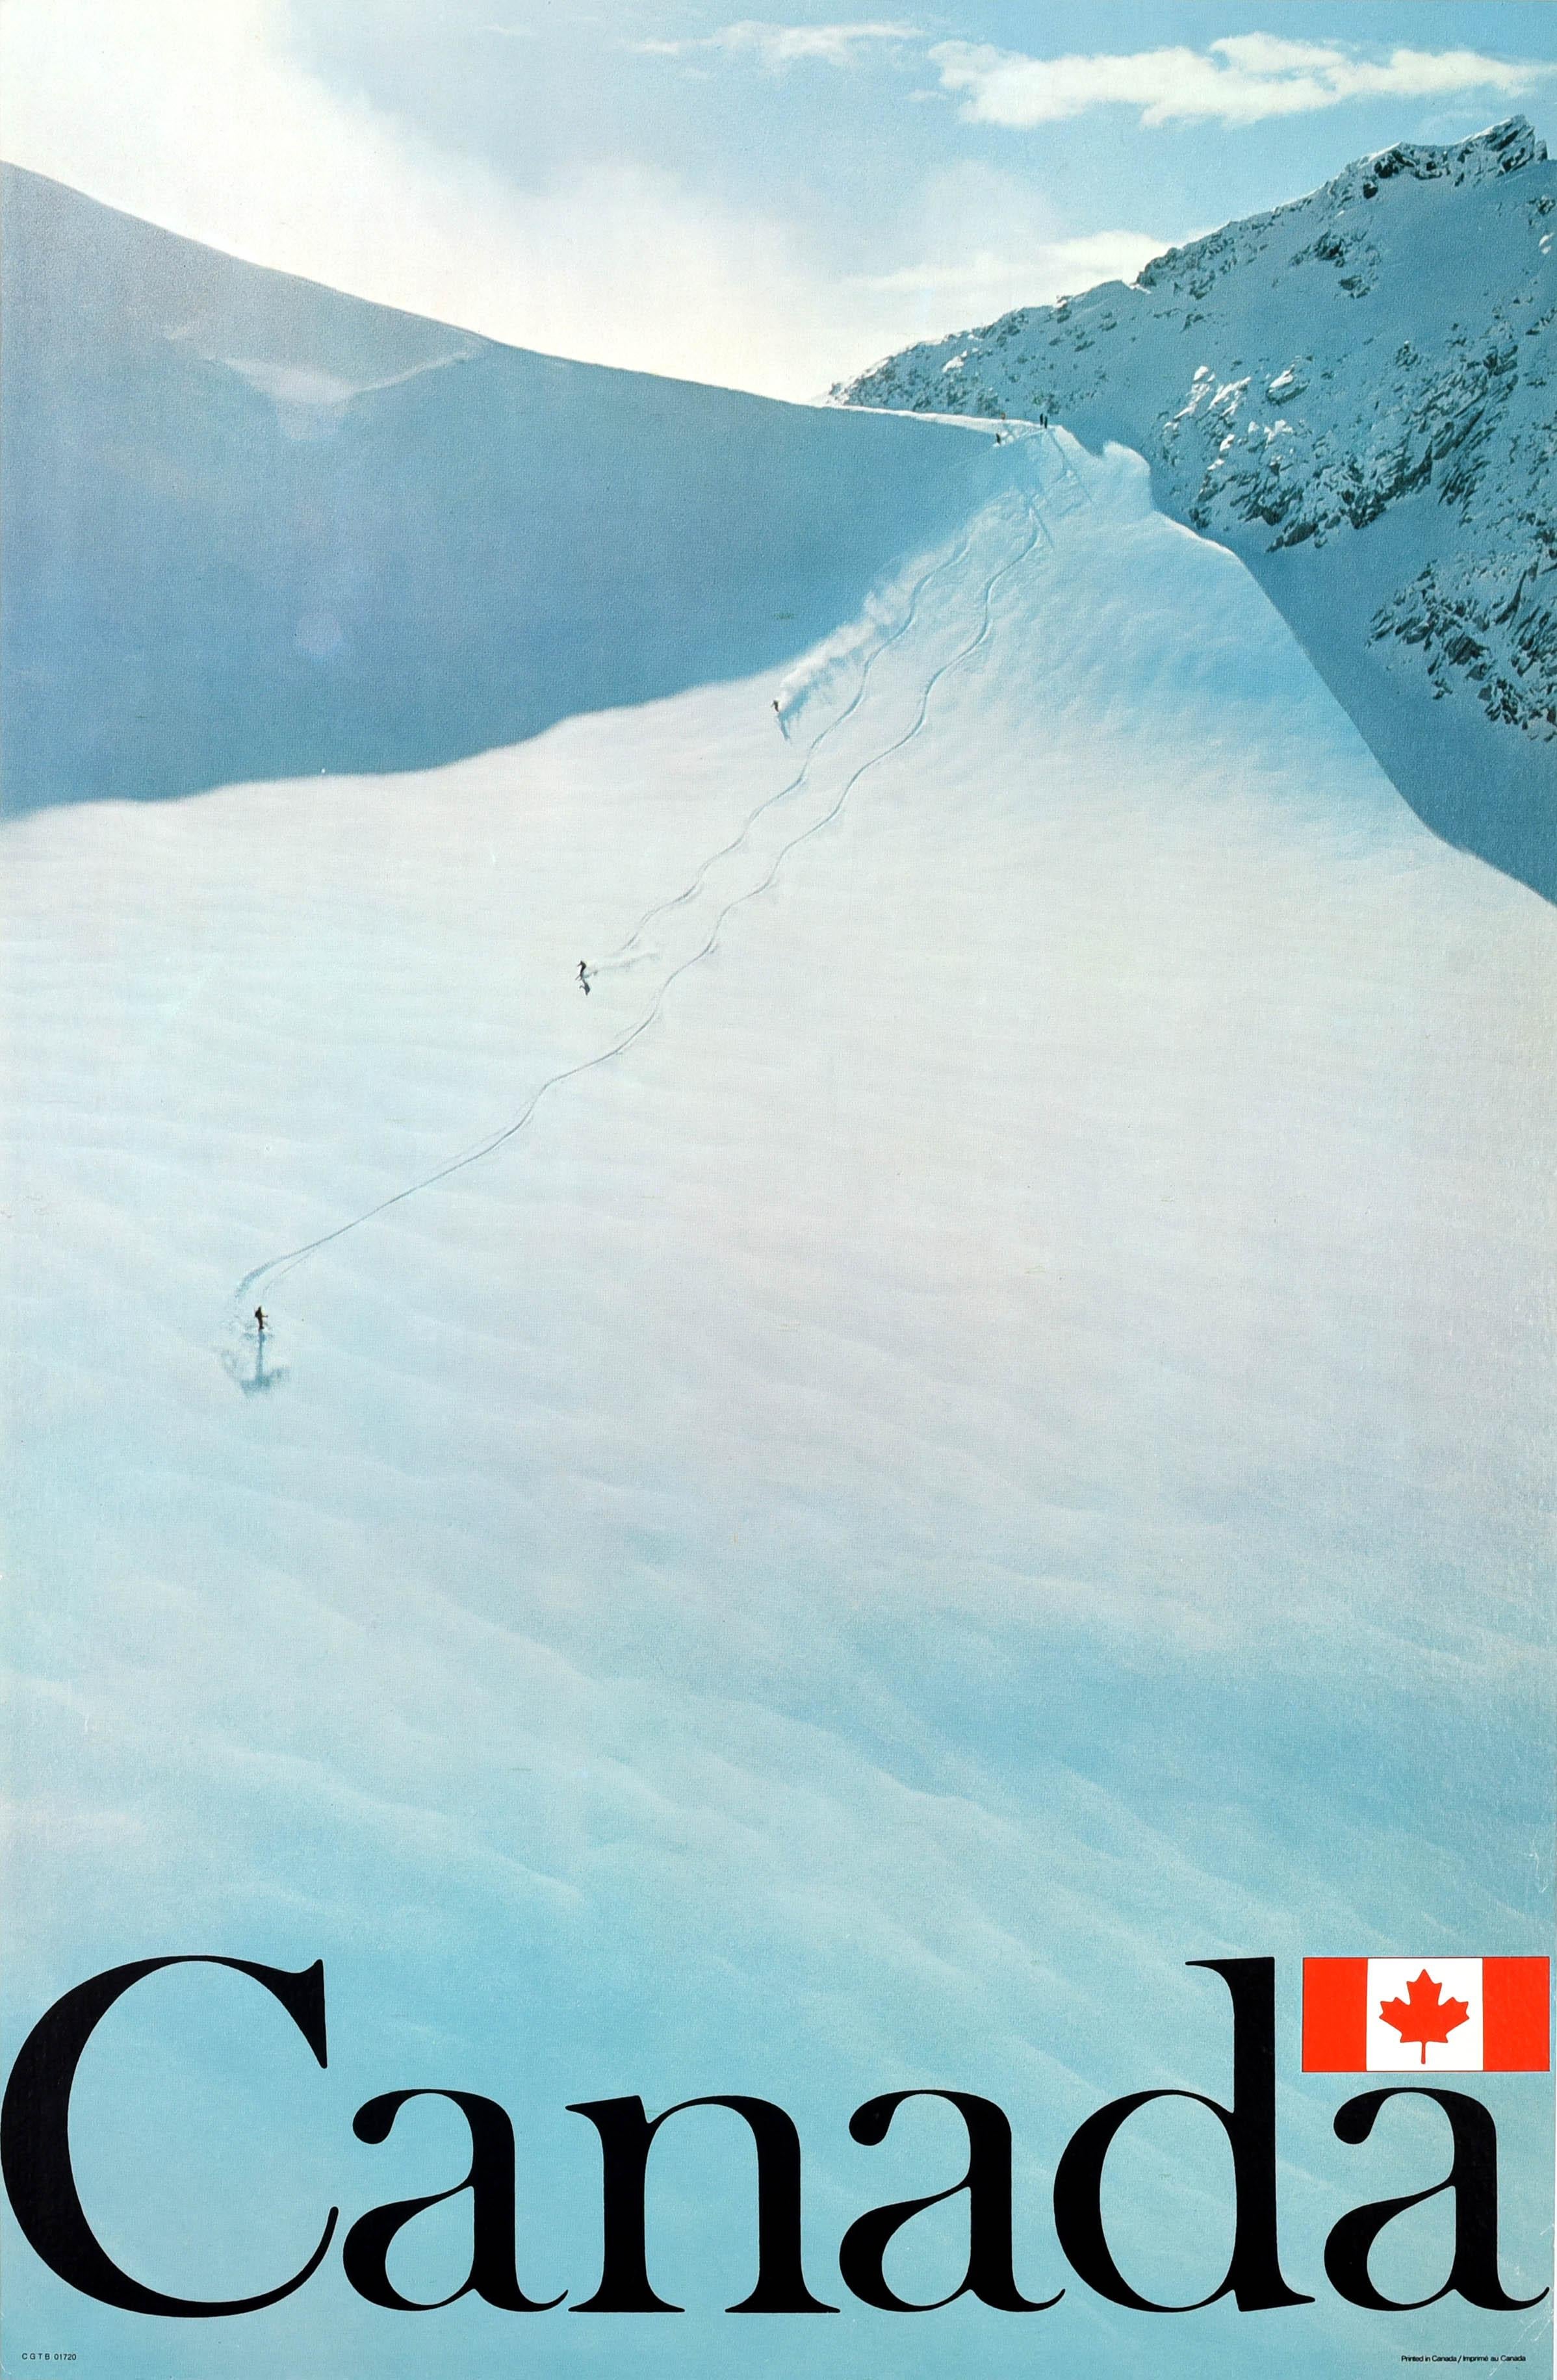 Unknown Print - Original Vintage Travel Poster Canada Ski Slope Winter Sports Mountain Skiing